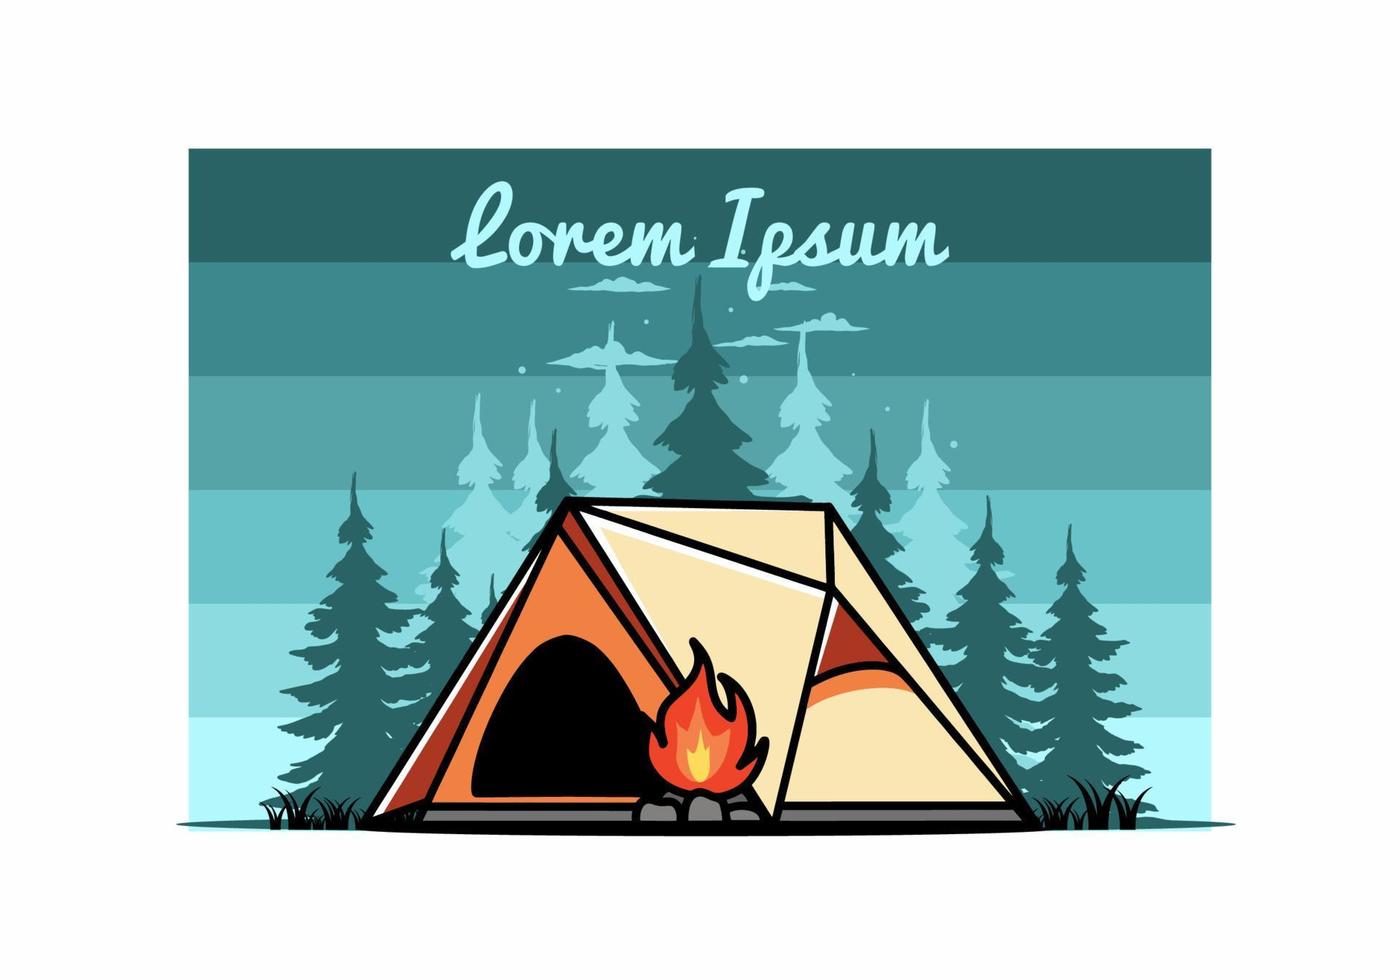 Dreieck-Campingzelt und Lagerfeuer-Illustrationsdesign vektor